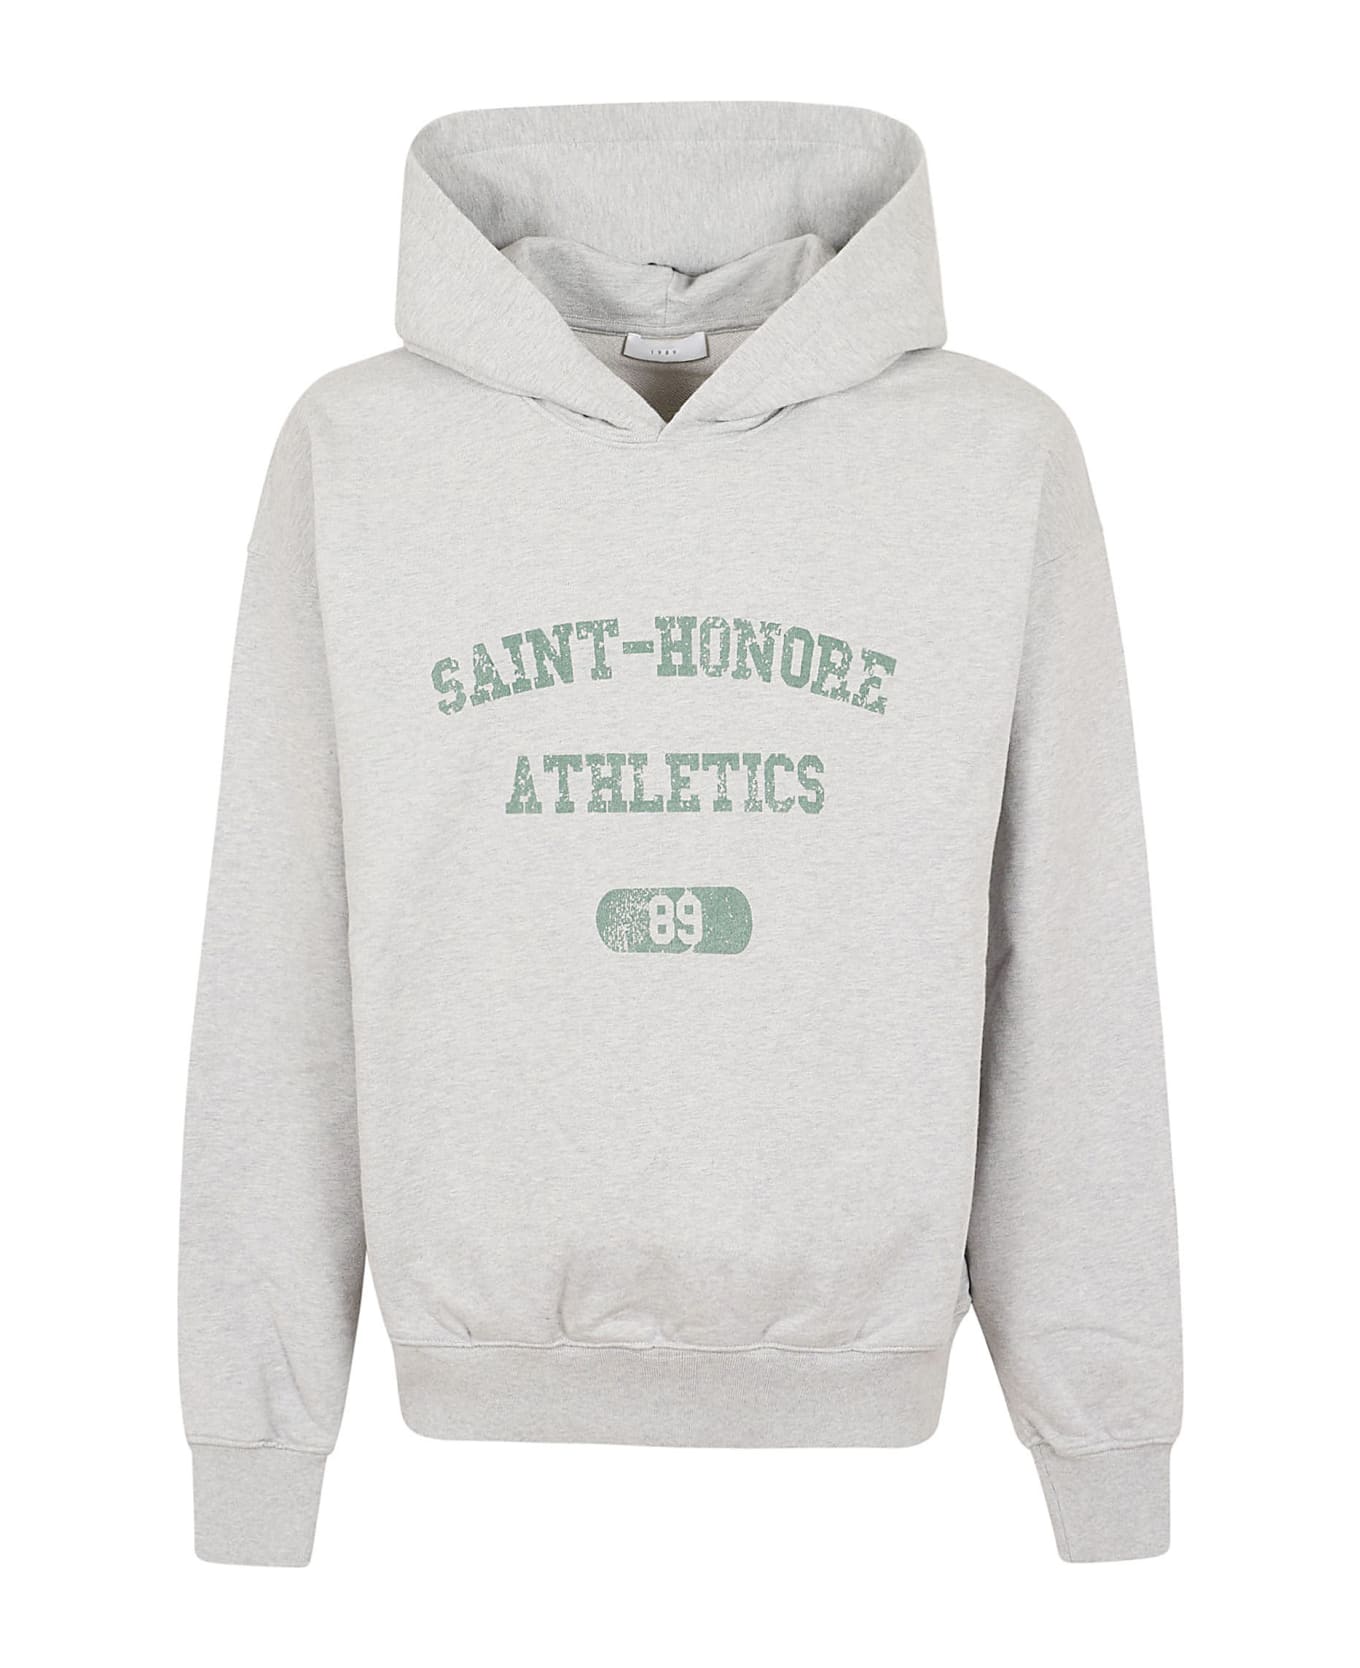 1989 Studio Saint Honore Athletics Distressed Hoodie - Heather Grey